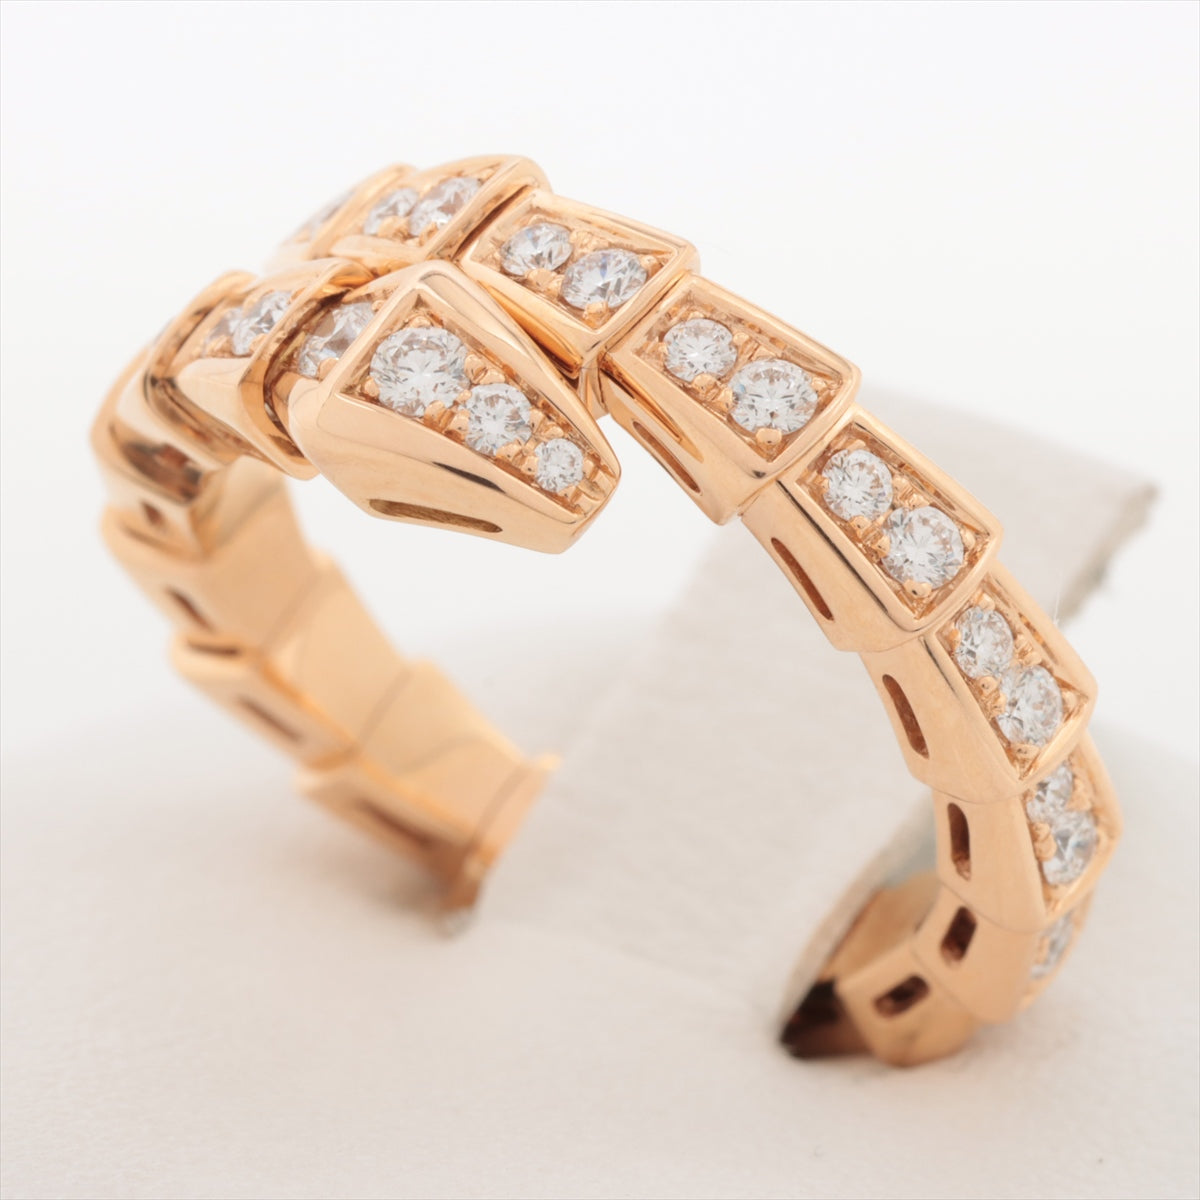 Bvlgari Serpenti Viper diamond rings 750(PG) 6.4g L 355977